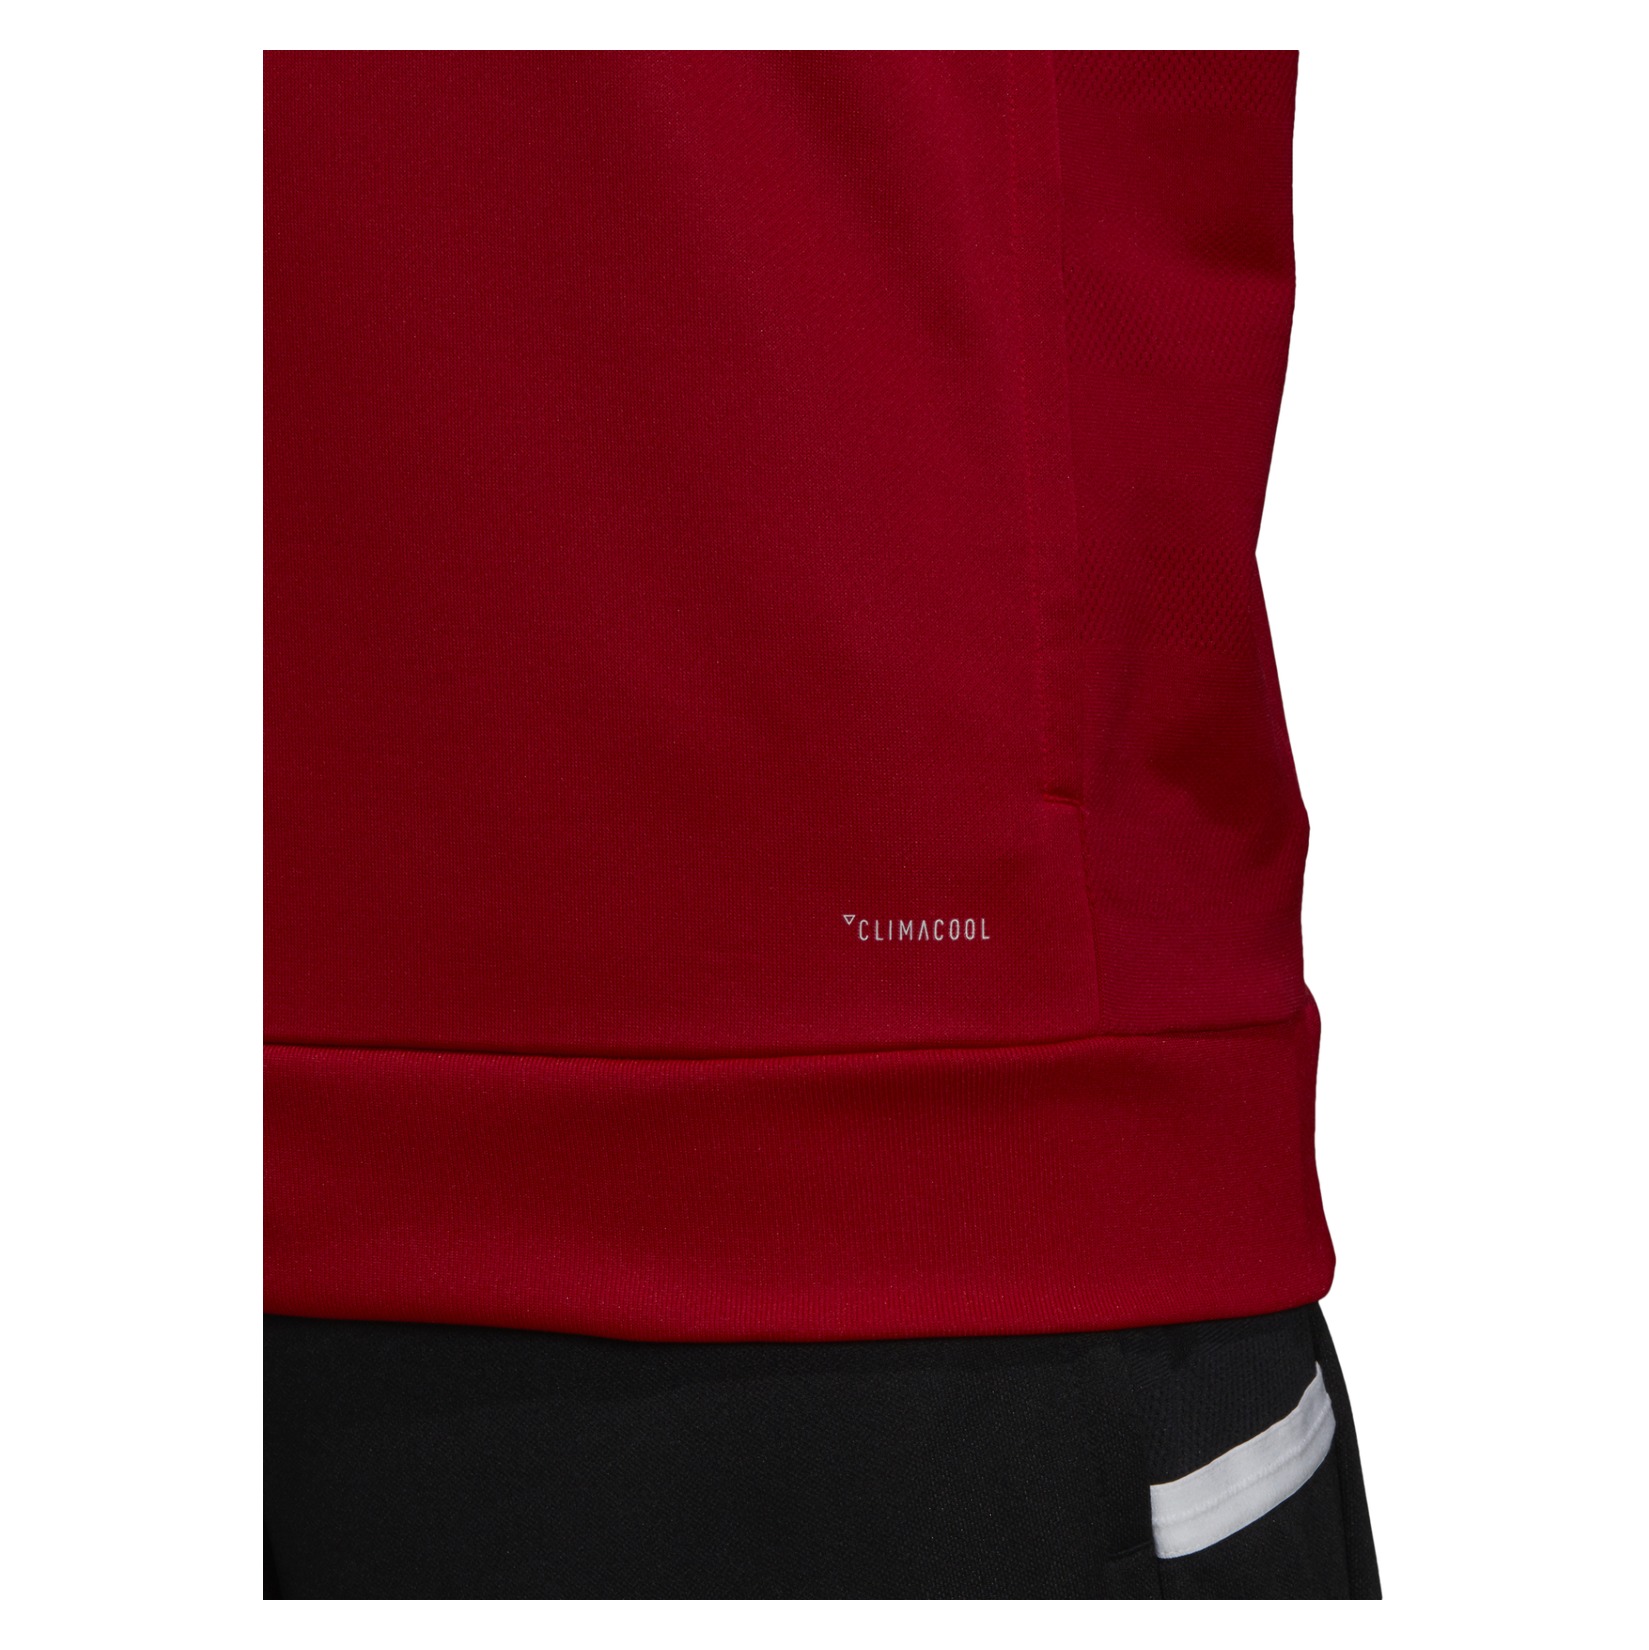 Adidas Team 19 Hoody (m) Power Red-White